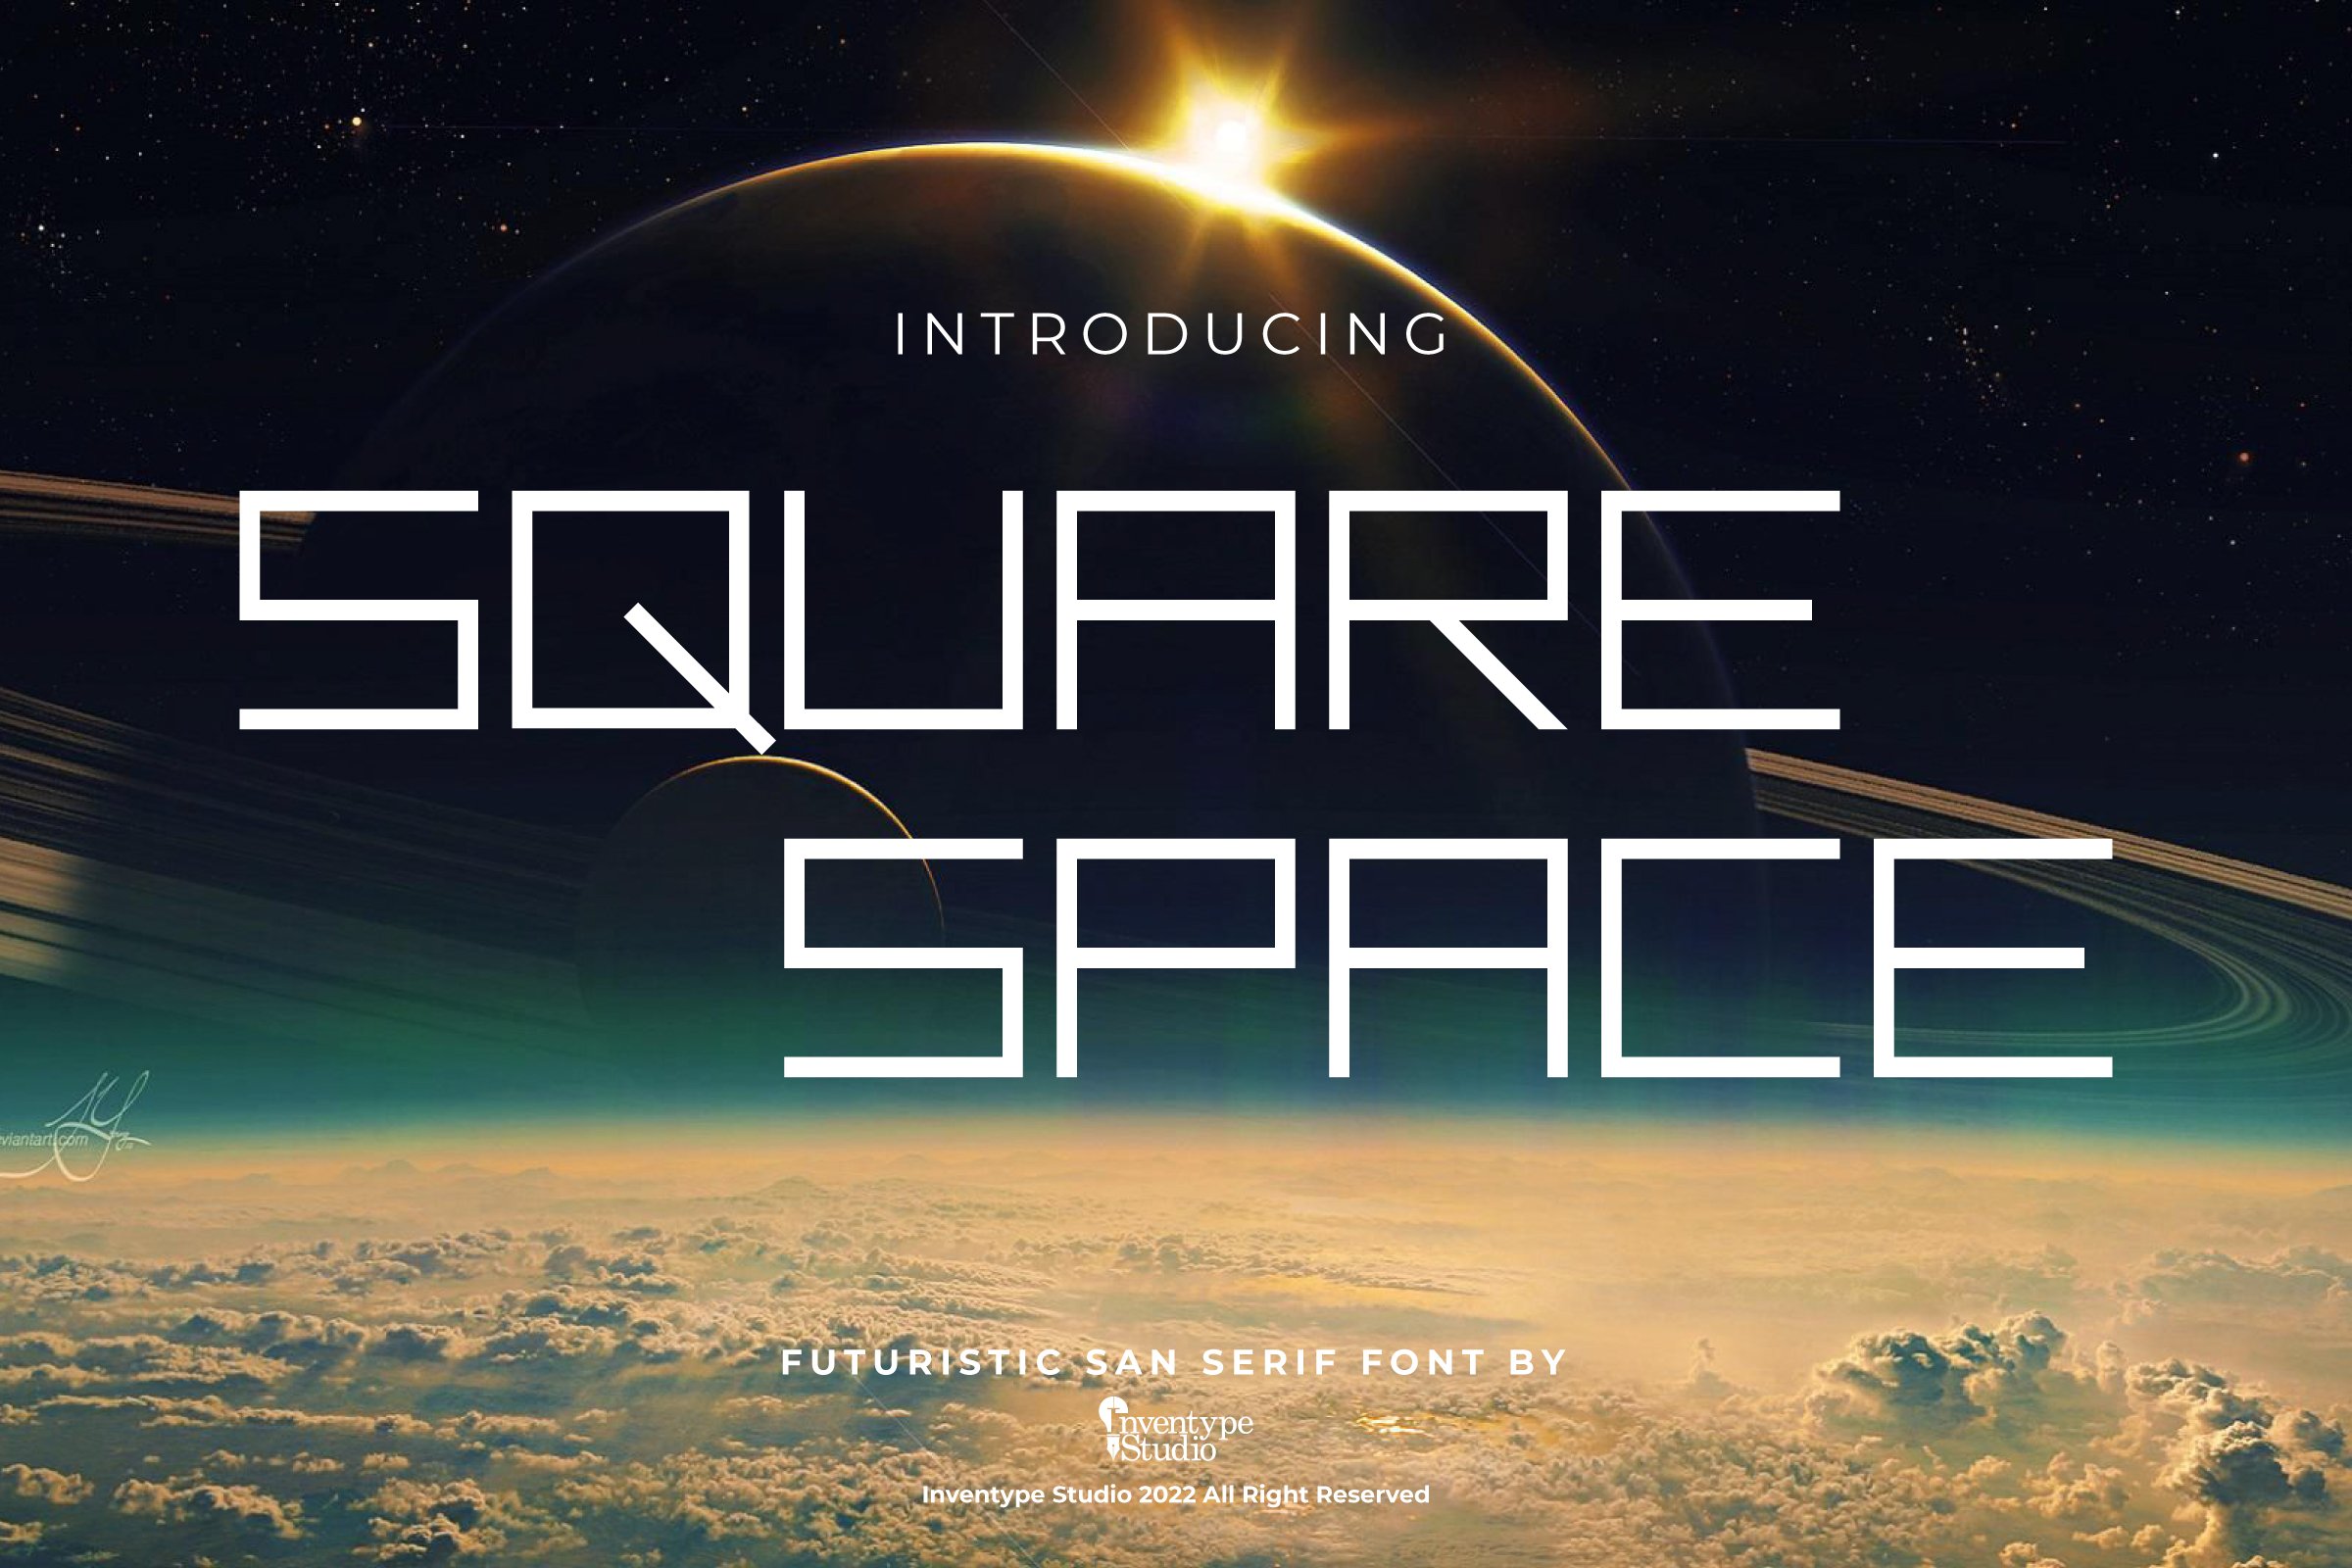 Square Space - Futuristic Font cover image.